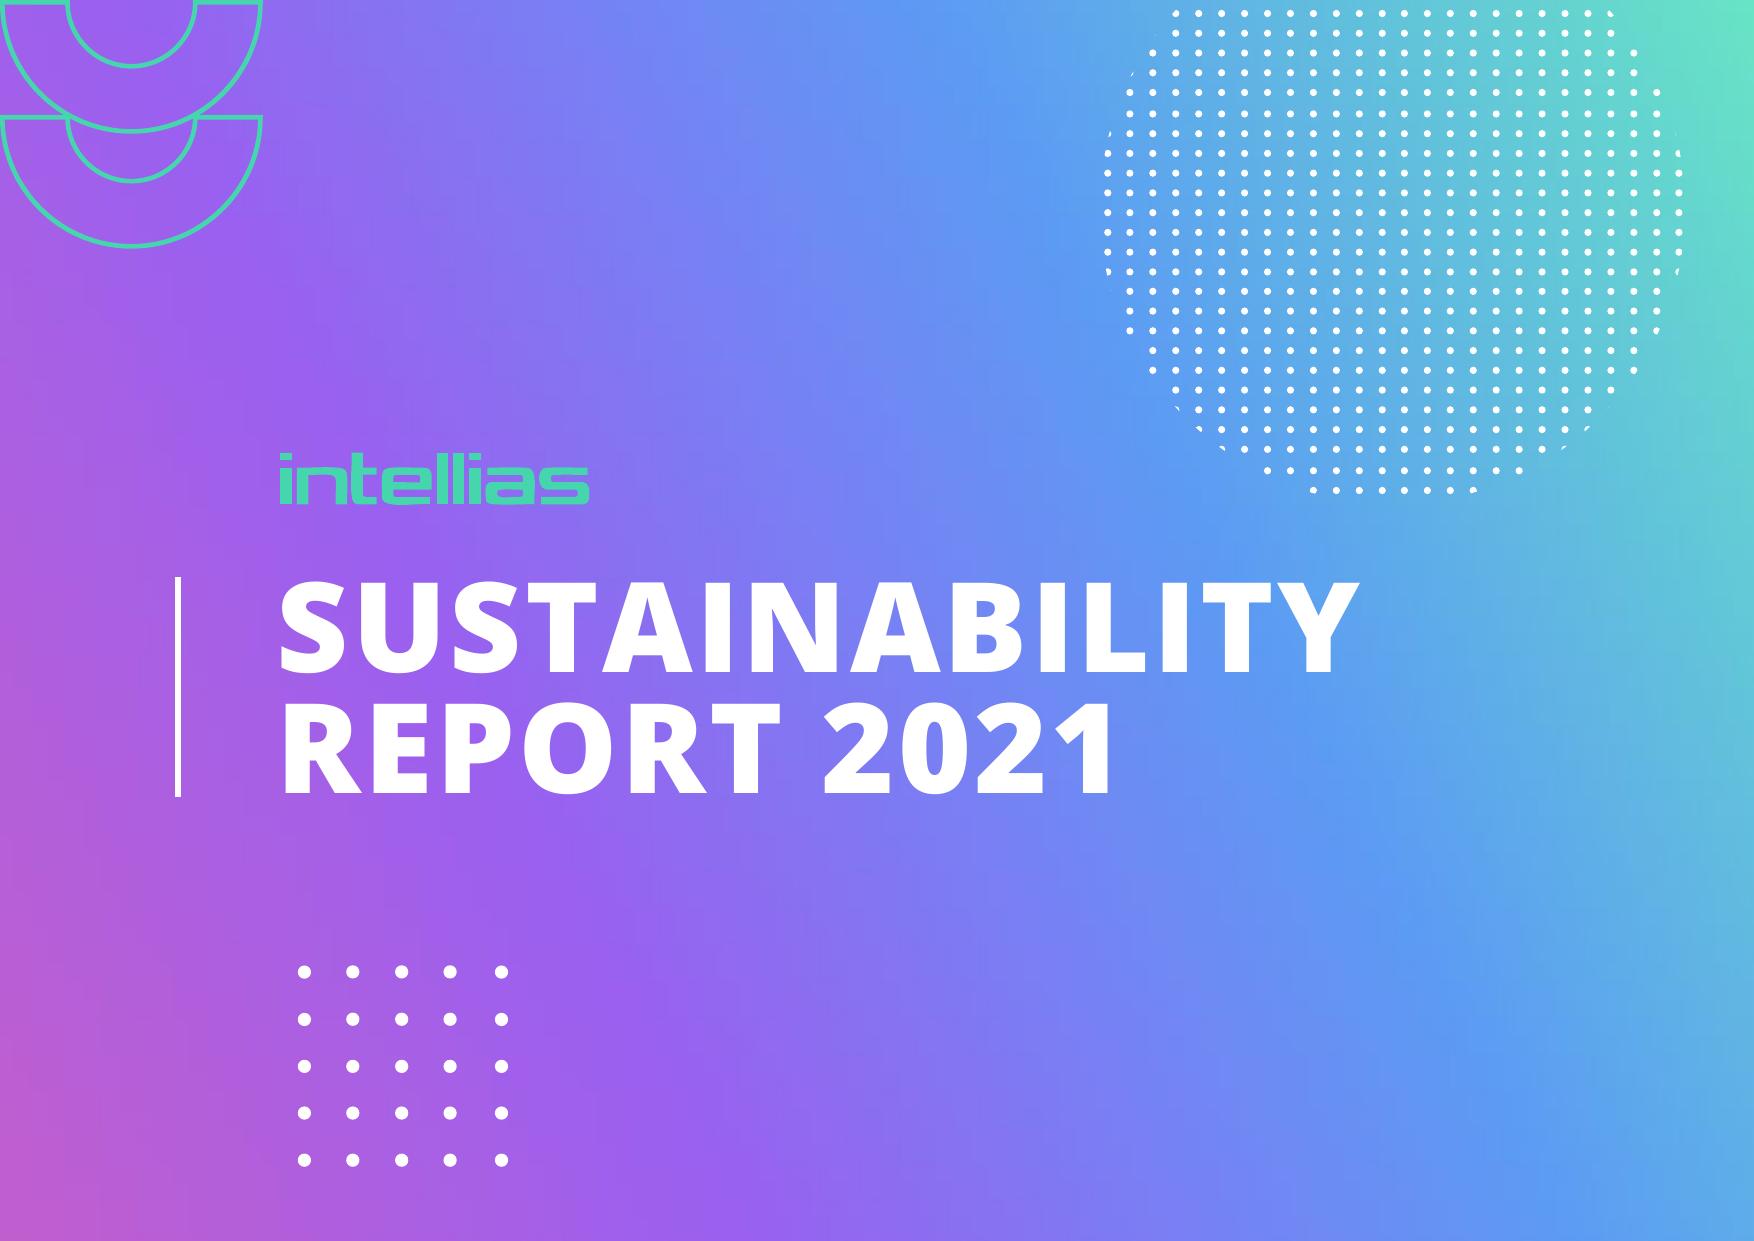 2022 Corporate social responsibility Report